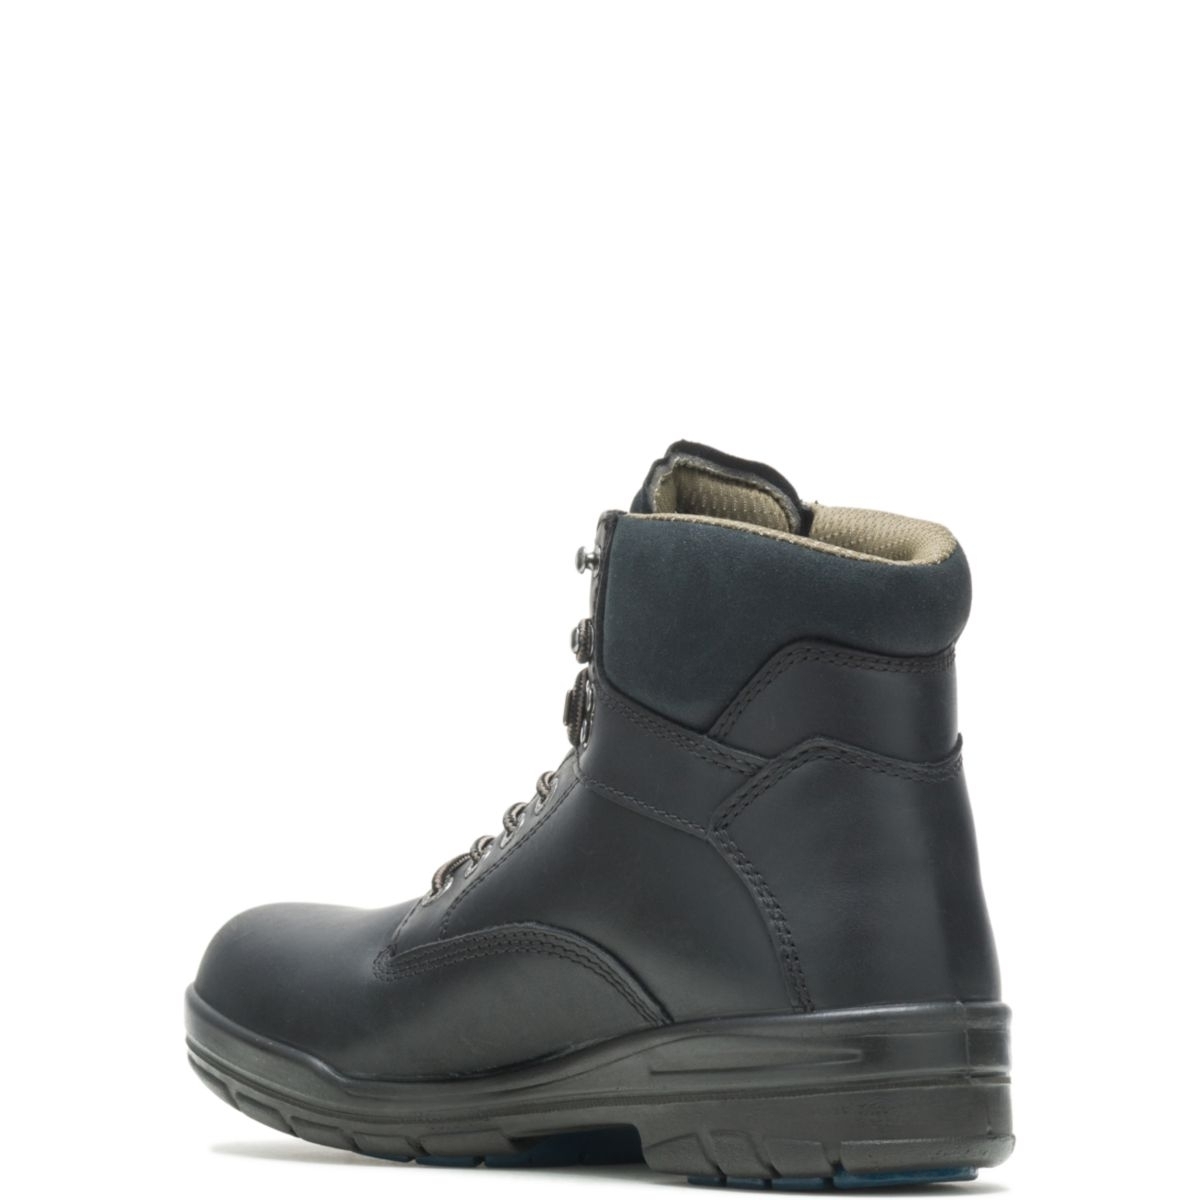 WOLVERINE Men's 6 DuraShocksÂ® Slip Resistant Direct-Attached Lined Soft Toe Work Boot Black - W03123 14 WIDE BLACK - BLACK, 13 WIDE